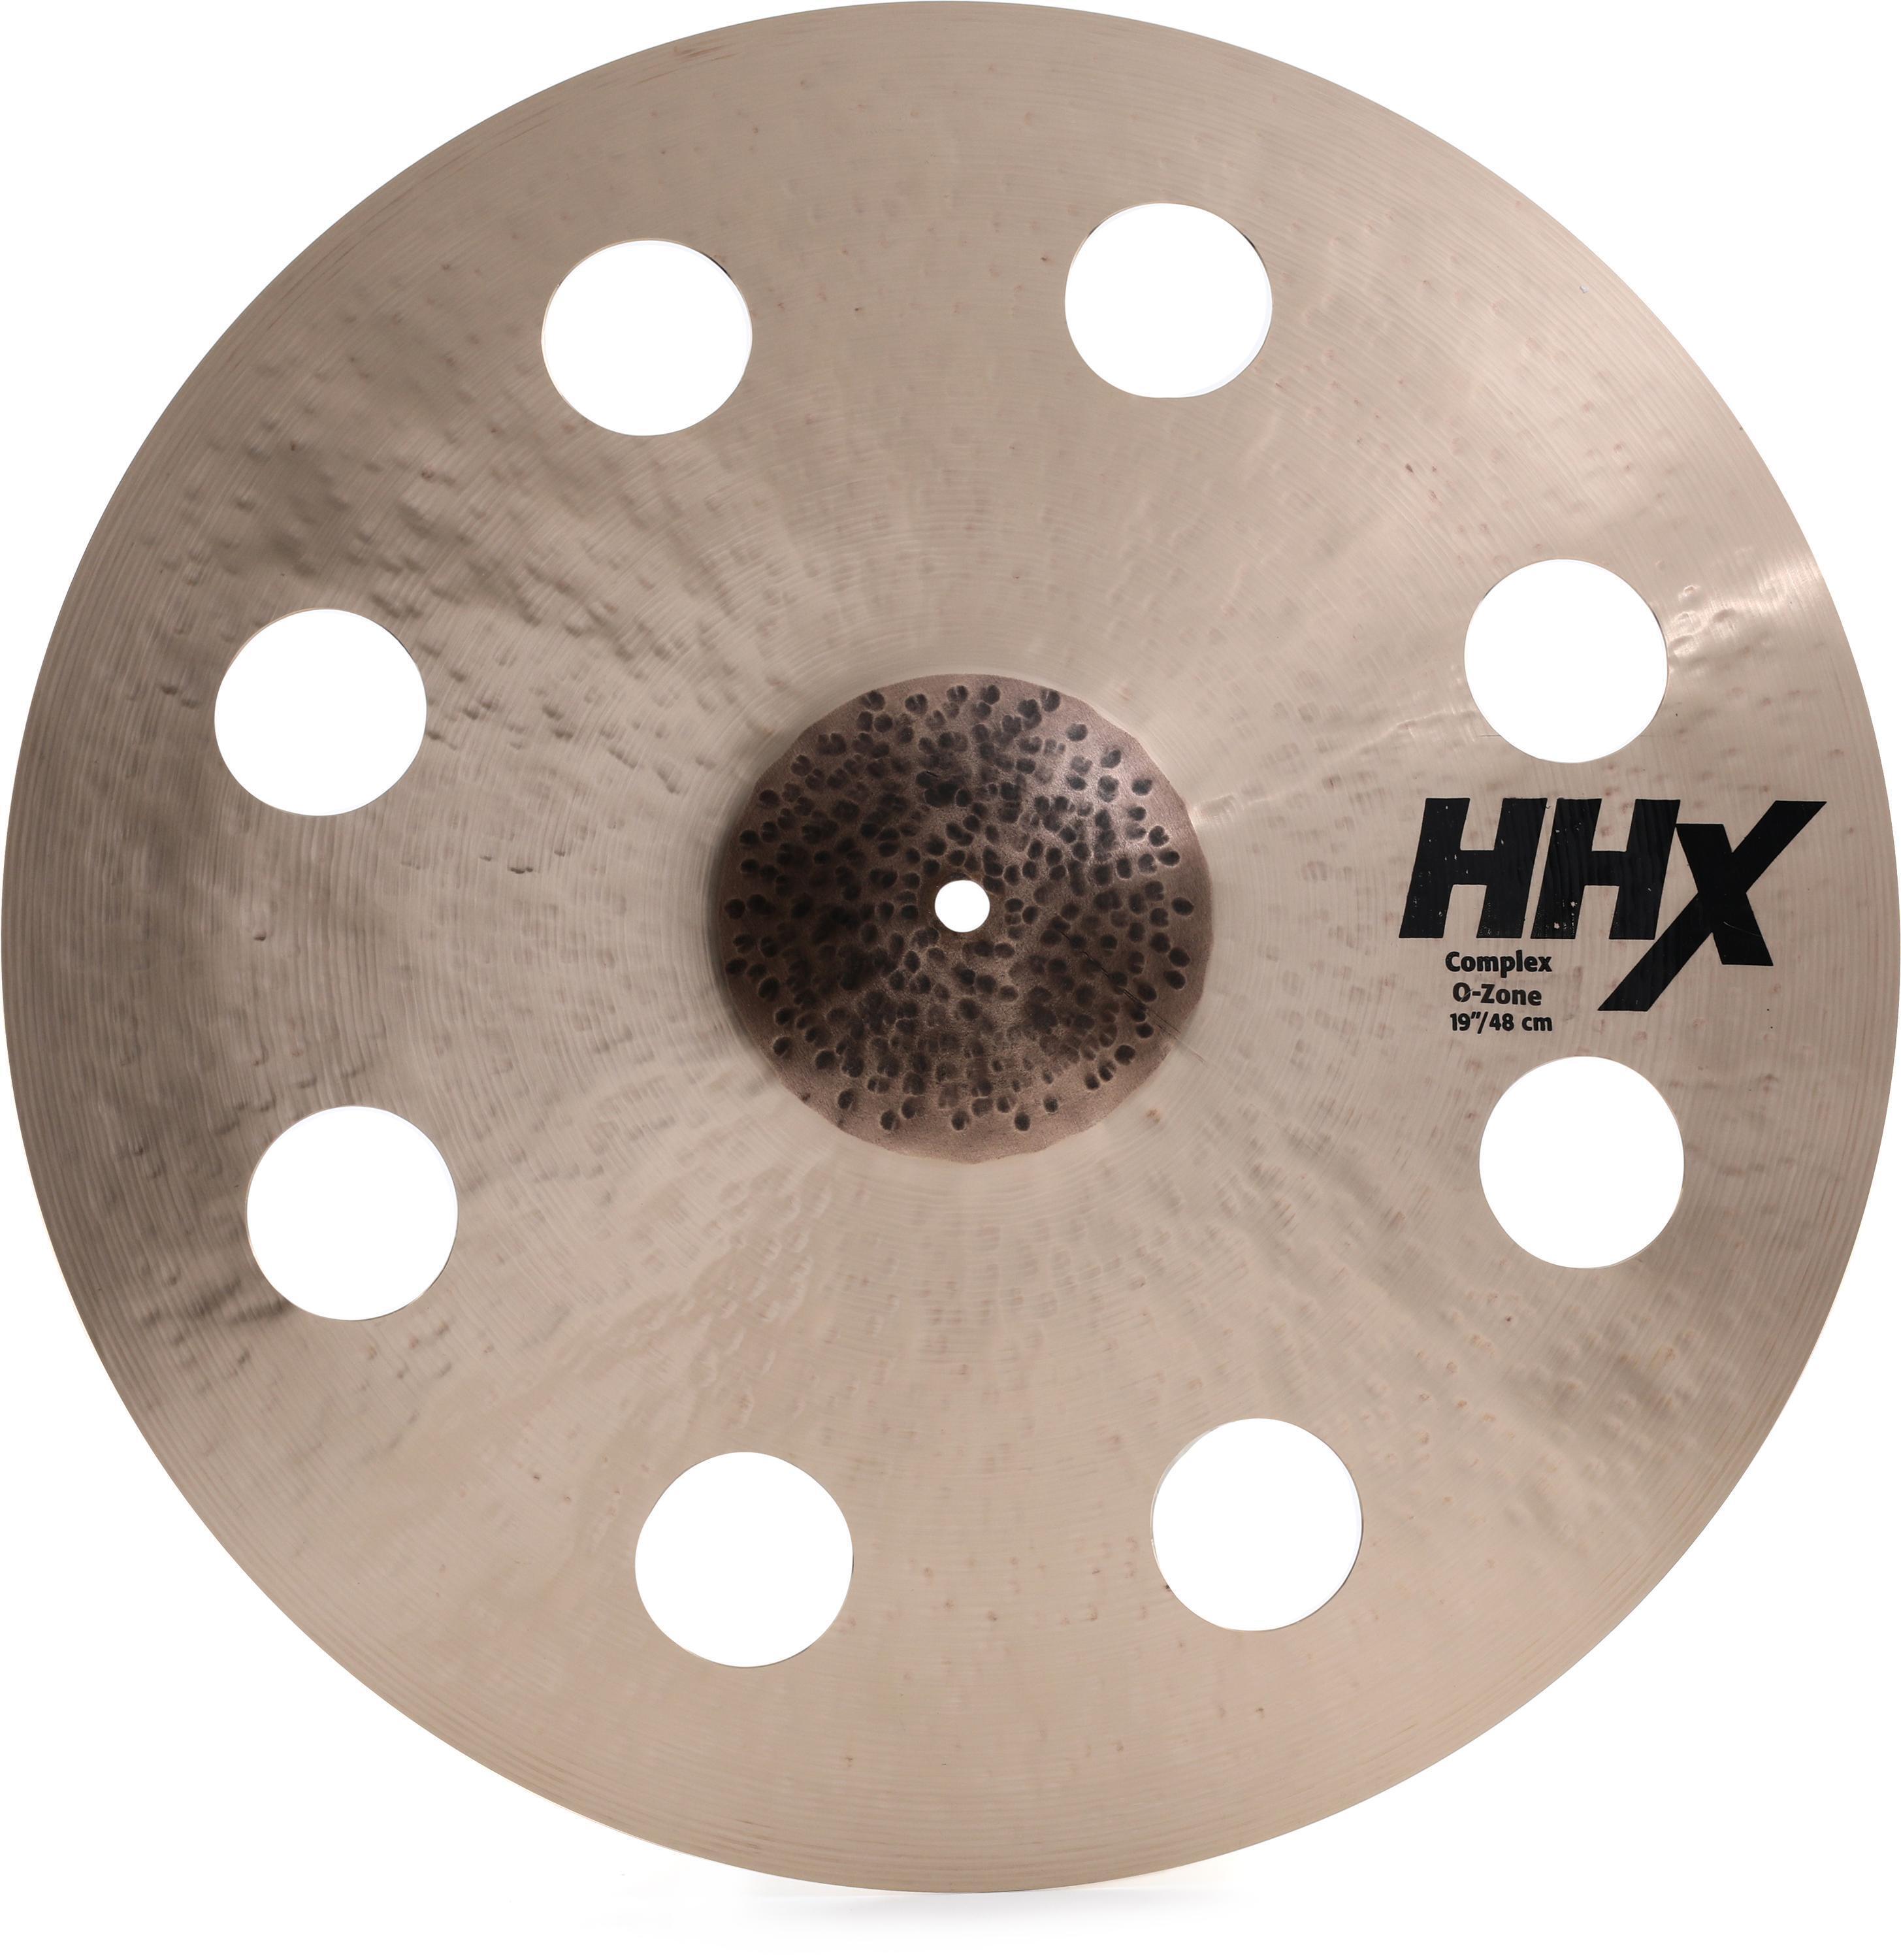 Sabian 22 inch HHX Evolution Ride Cymbal - Brilliant Finish 